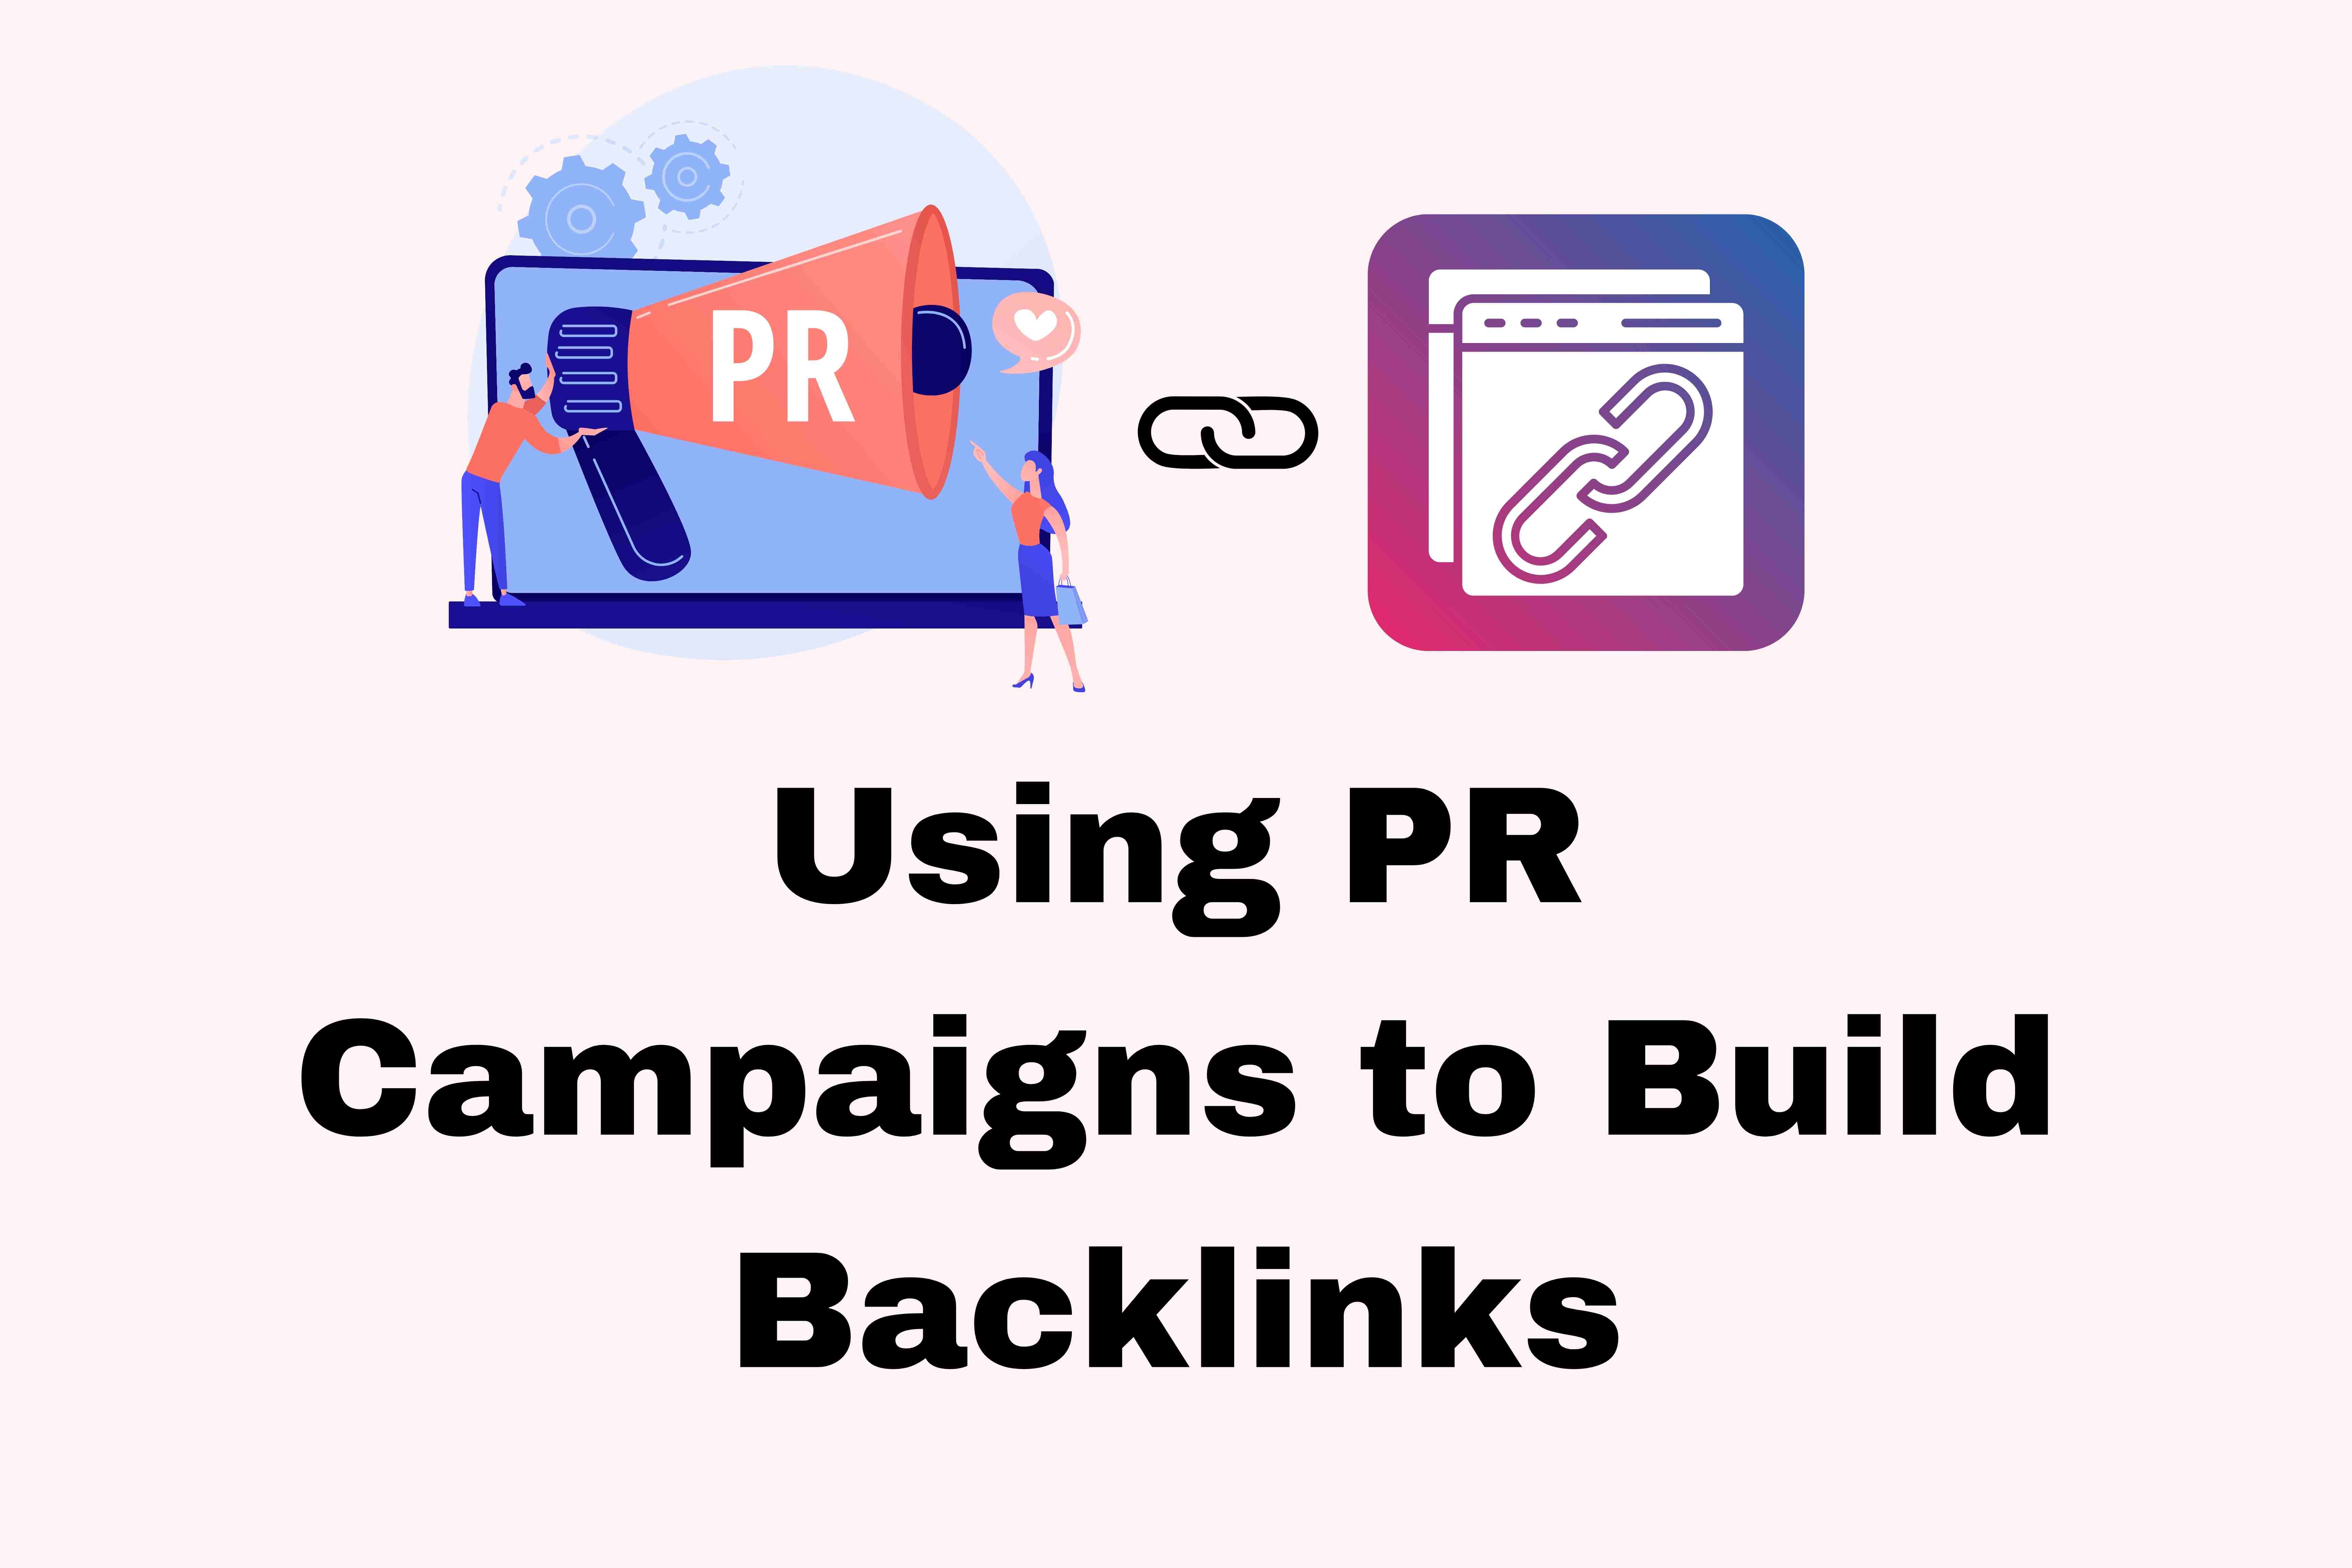 PR campaigns, backlinks, SEO